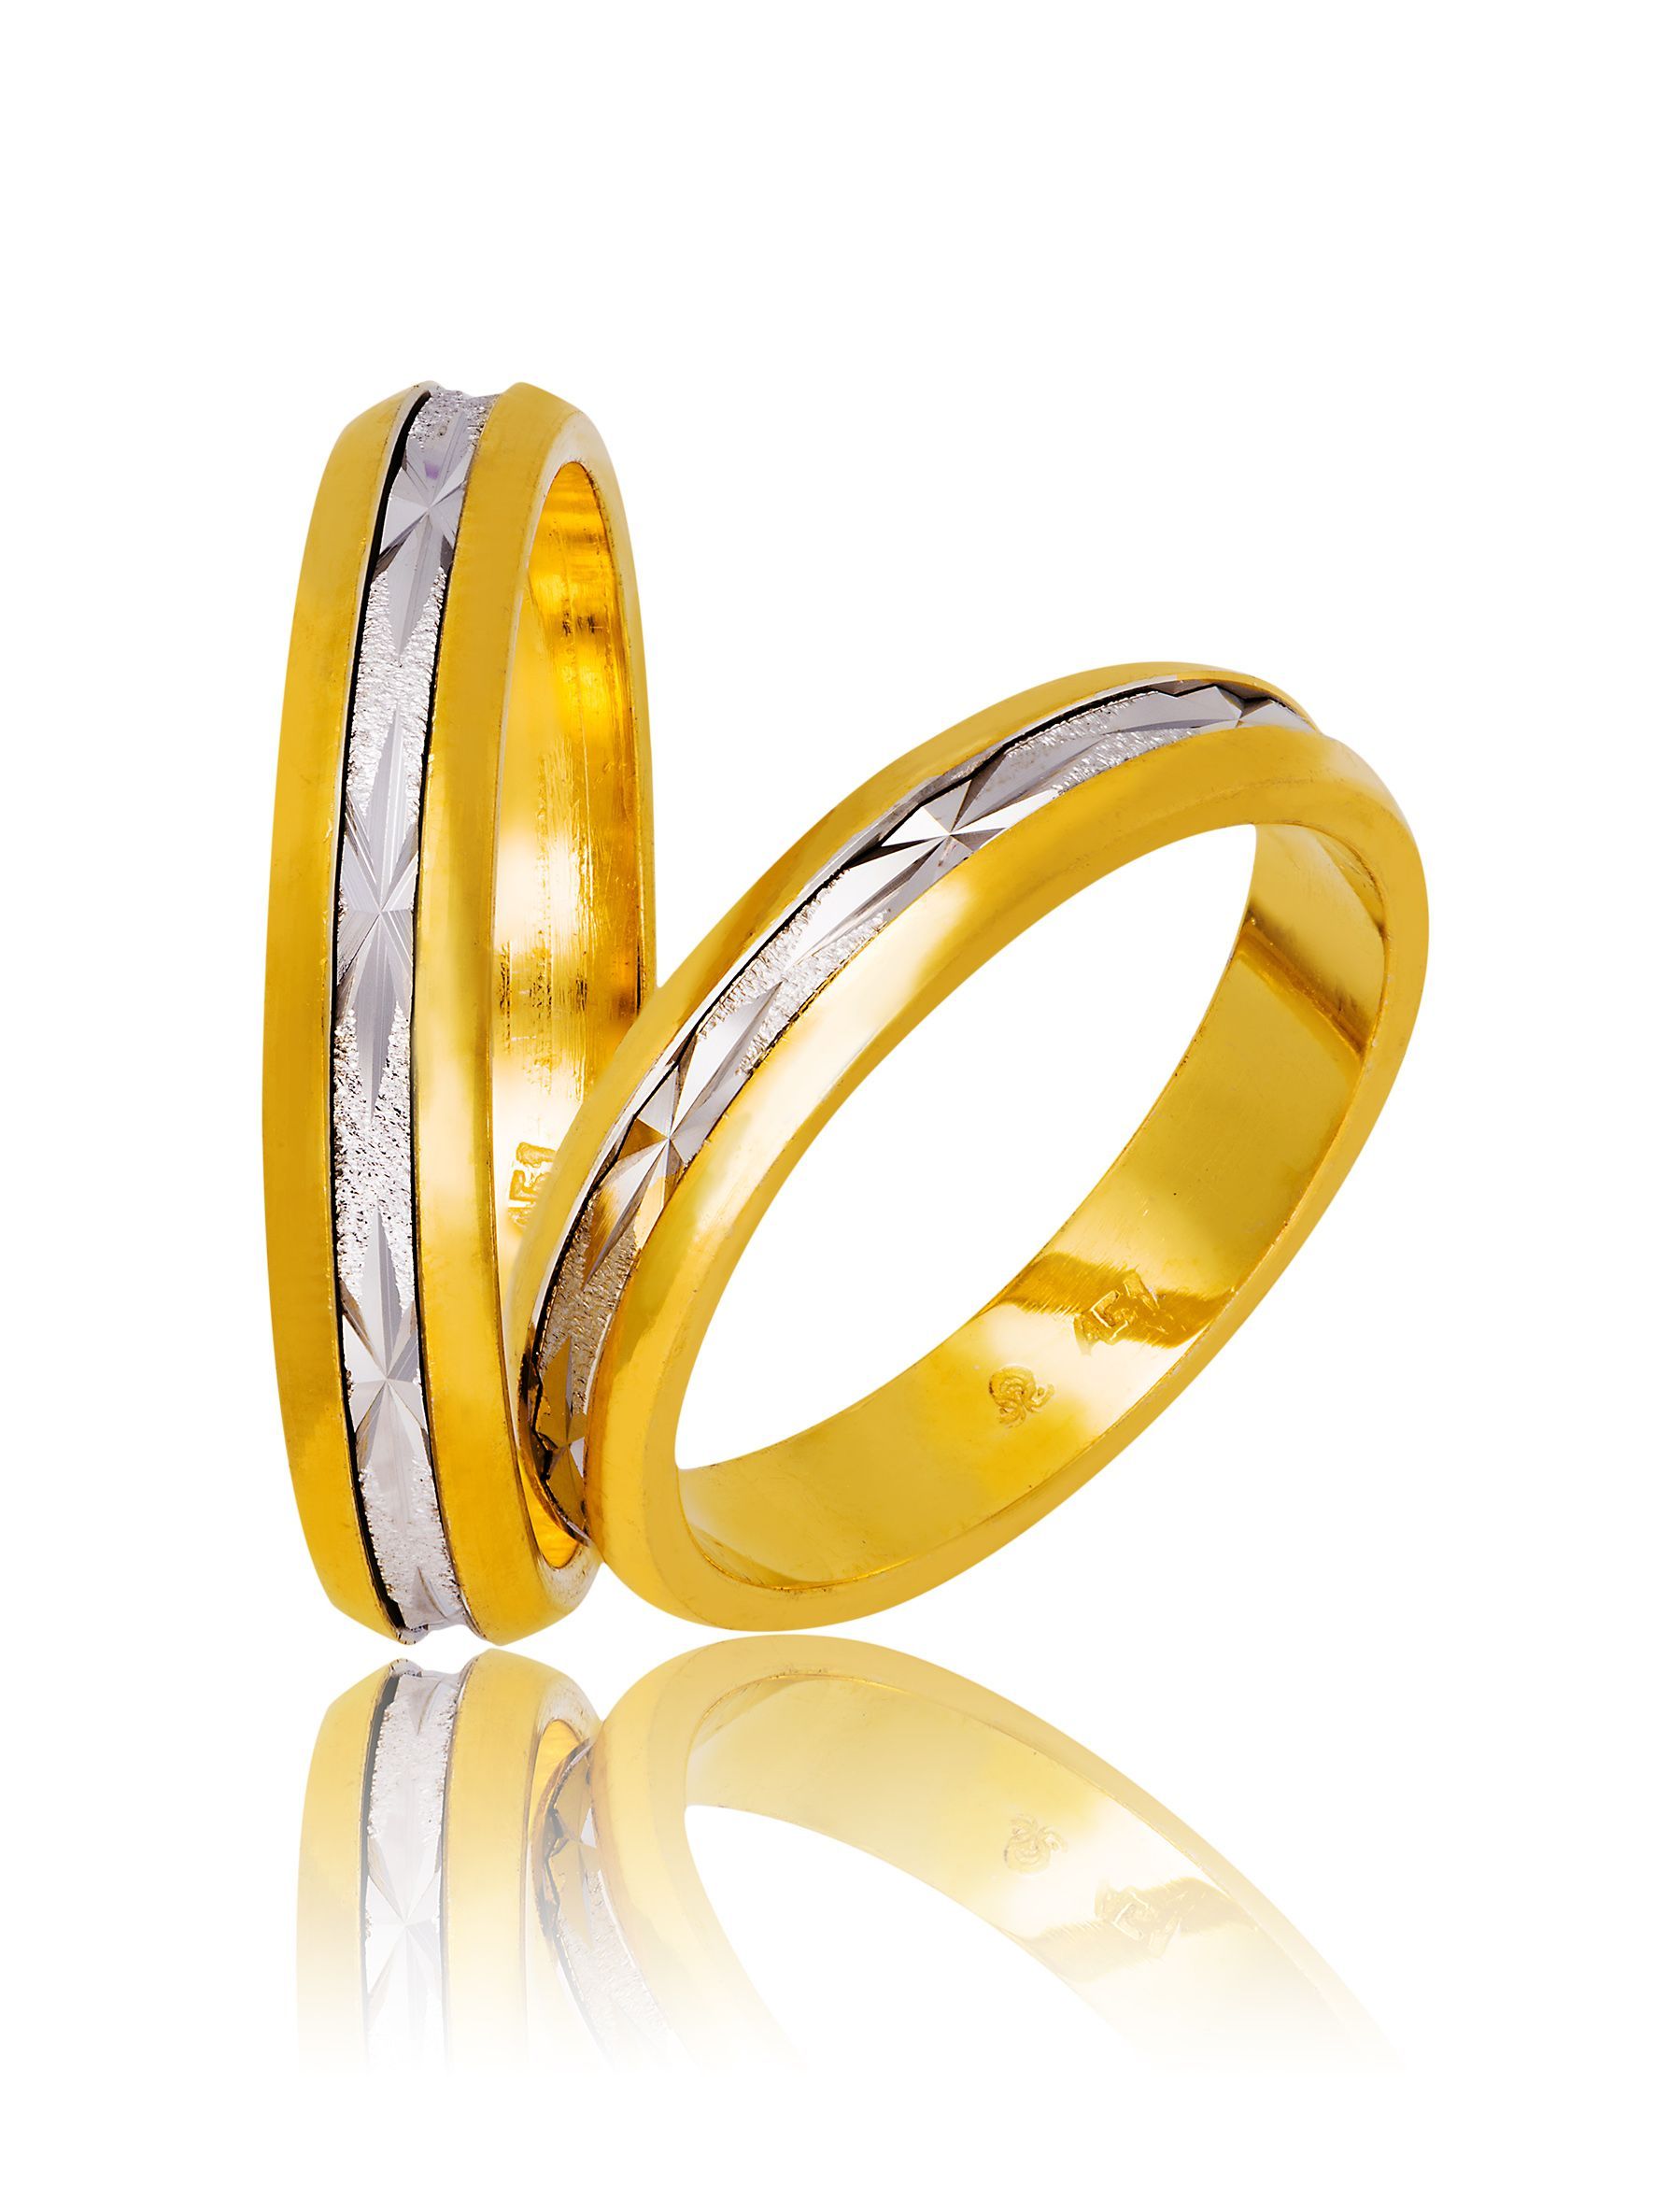 White gold & gold wedding rings 4.3mm (code 723)